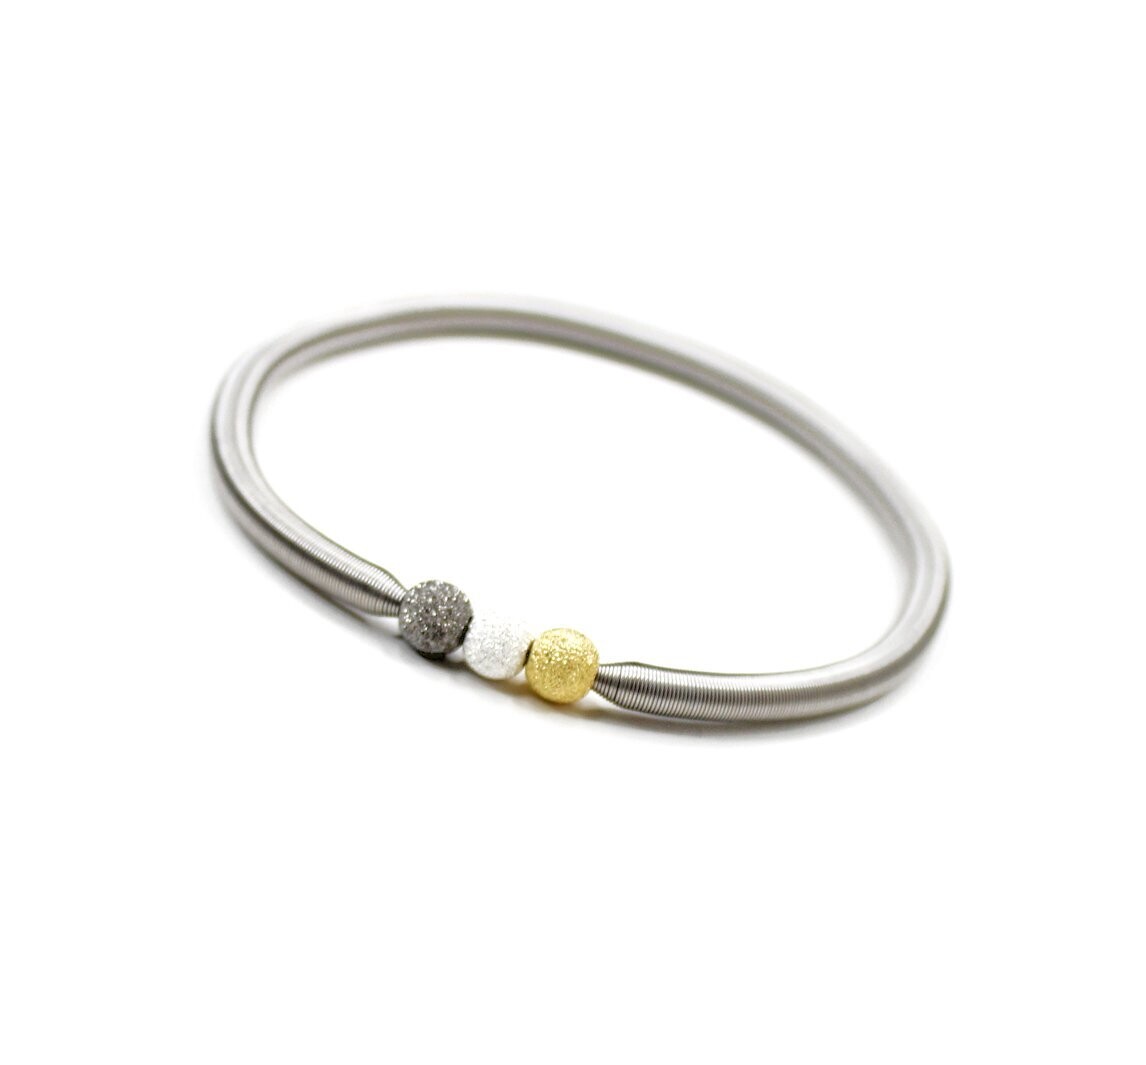 Edelstahl Stretch Armband mit 925 Silber Perlen Tricolor : Gold, Weiss & Grau